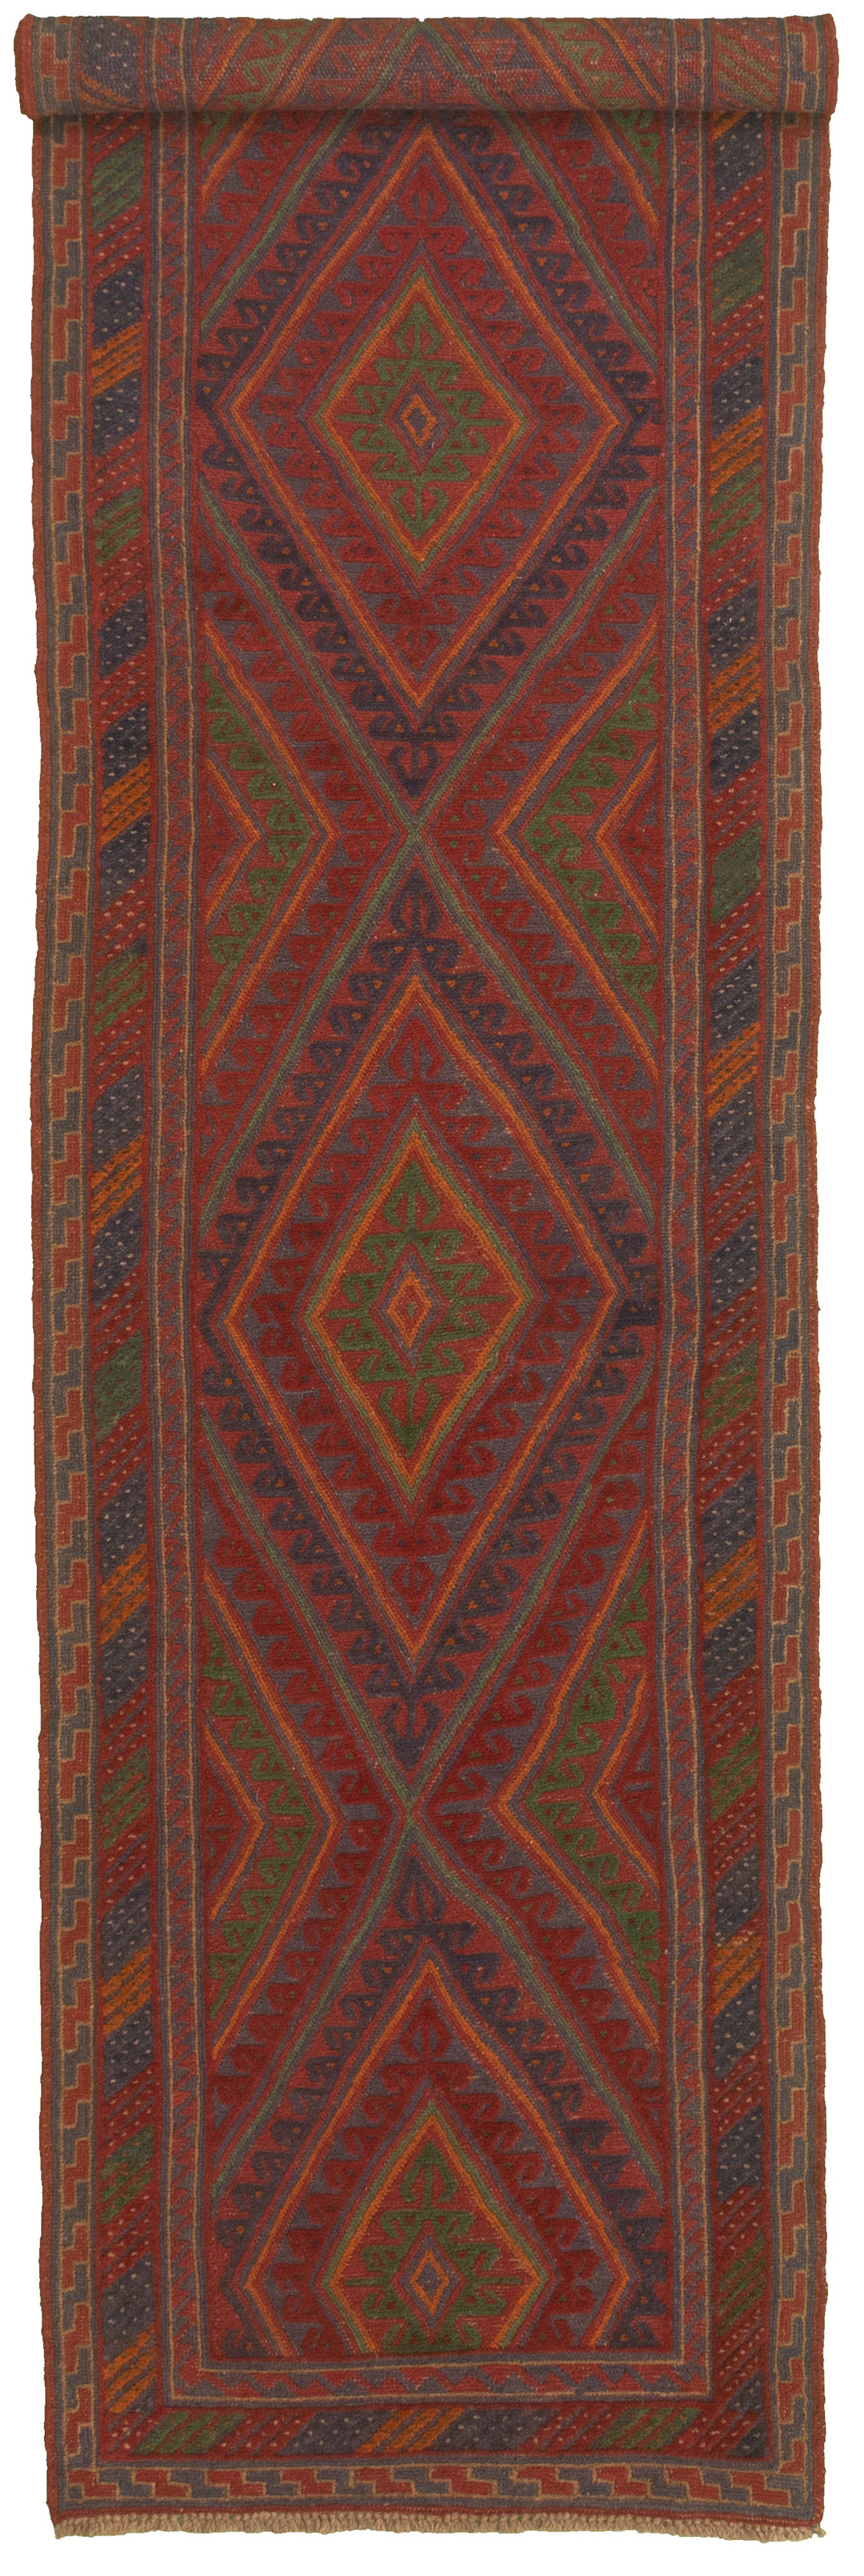 Hand-knotted Tajik Red Wool Rug 2'9" x 12'9" Size: 2'9" x 12'9"  